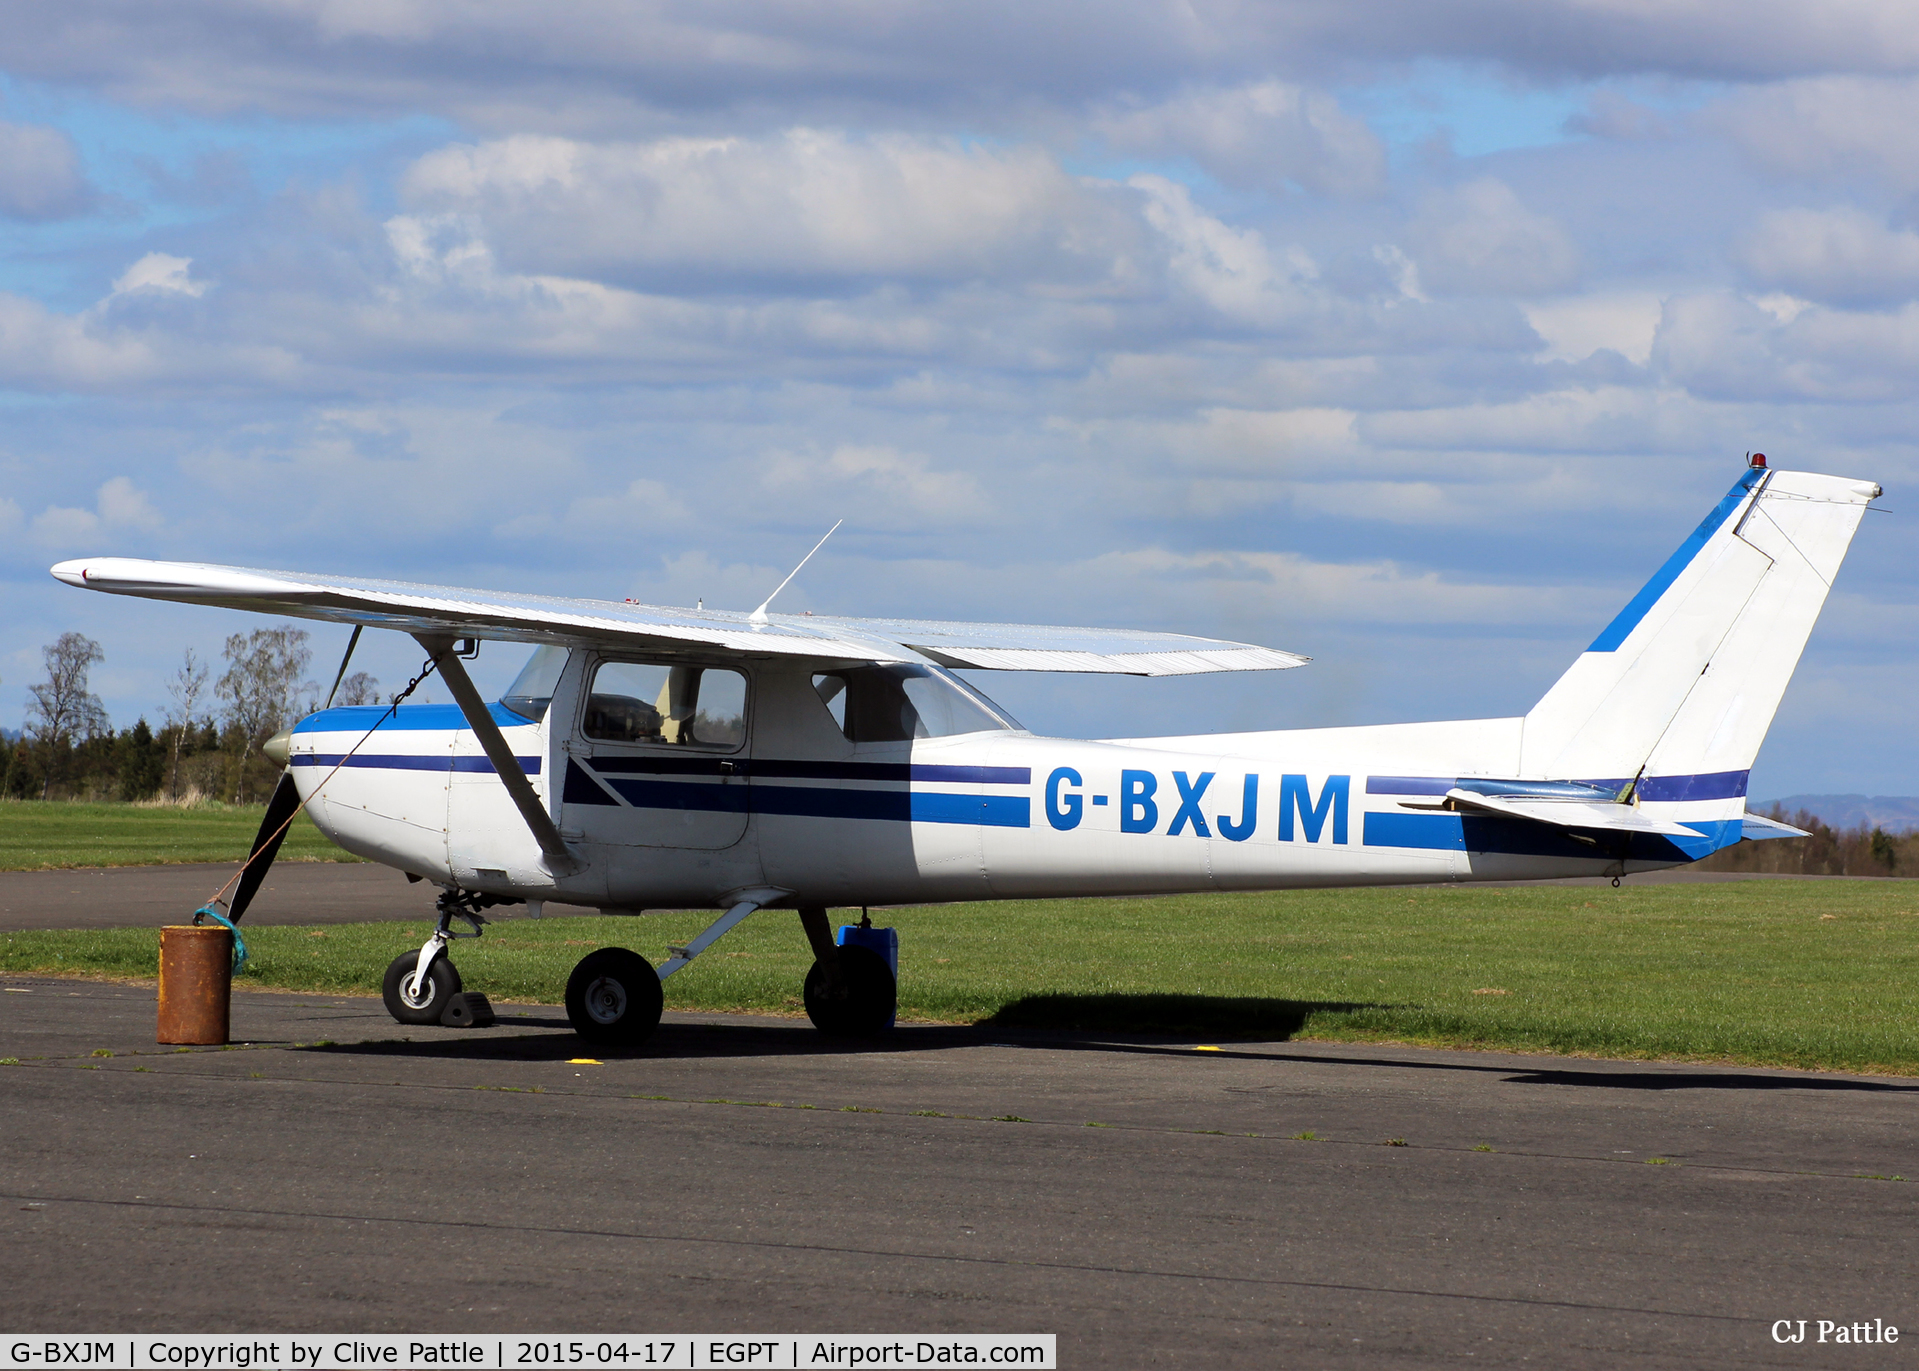 G-BXJM, 1978 Cessna 152 C/N 152-82380, Parked at Perth EGPT